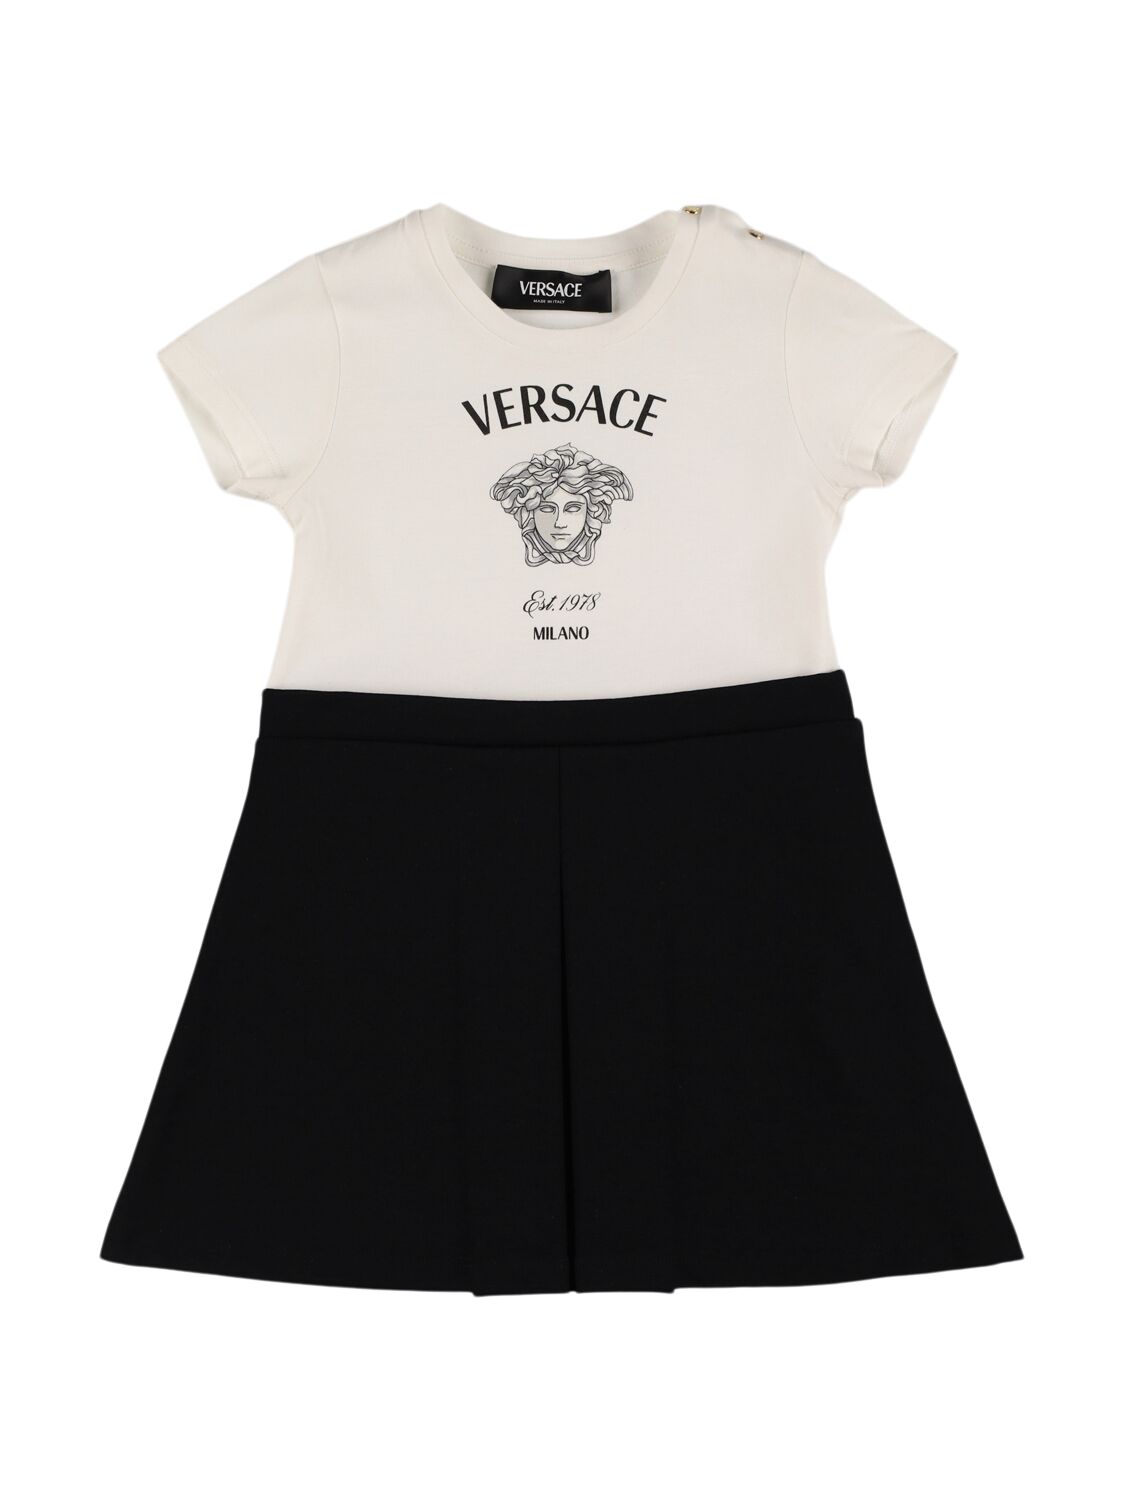 Versace Printed Logo Cotton Jersey Dress In White/black